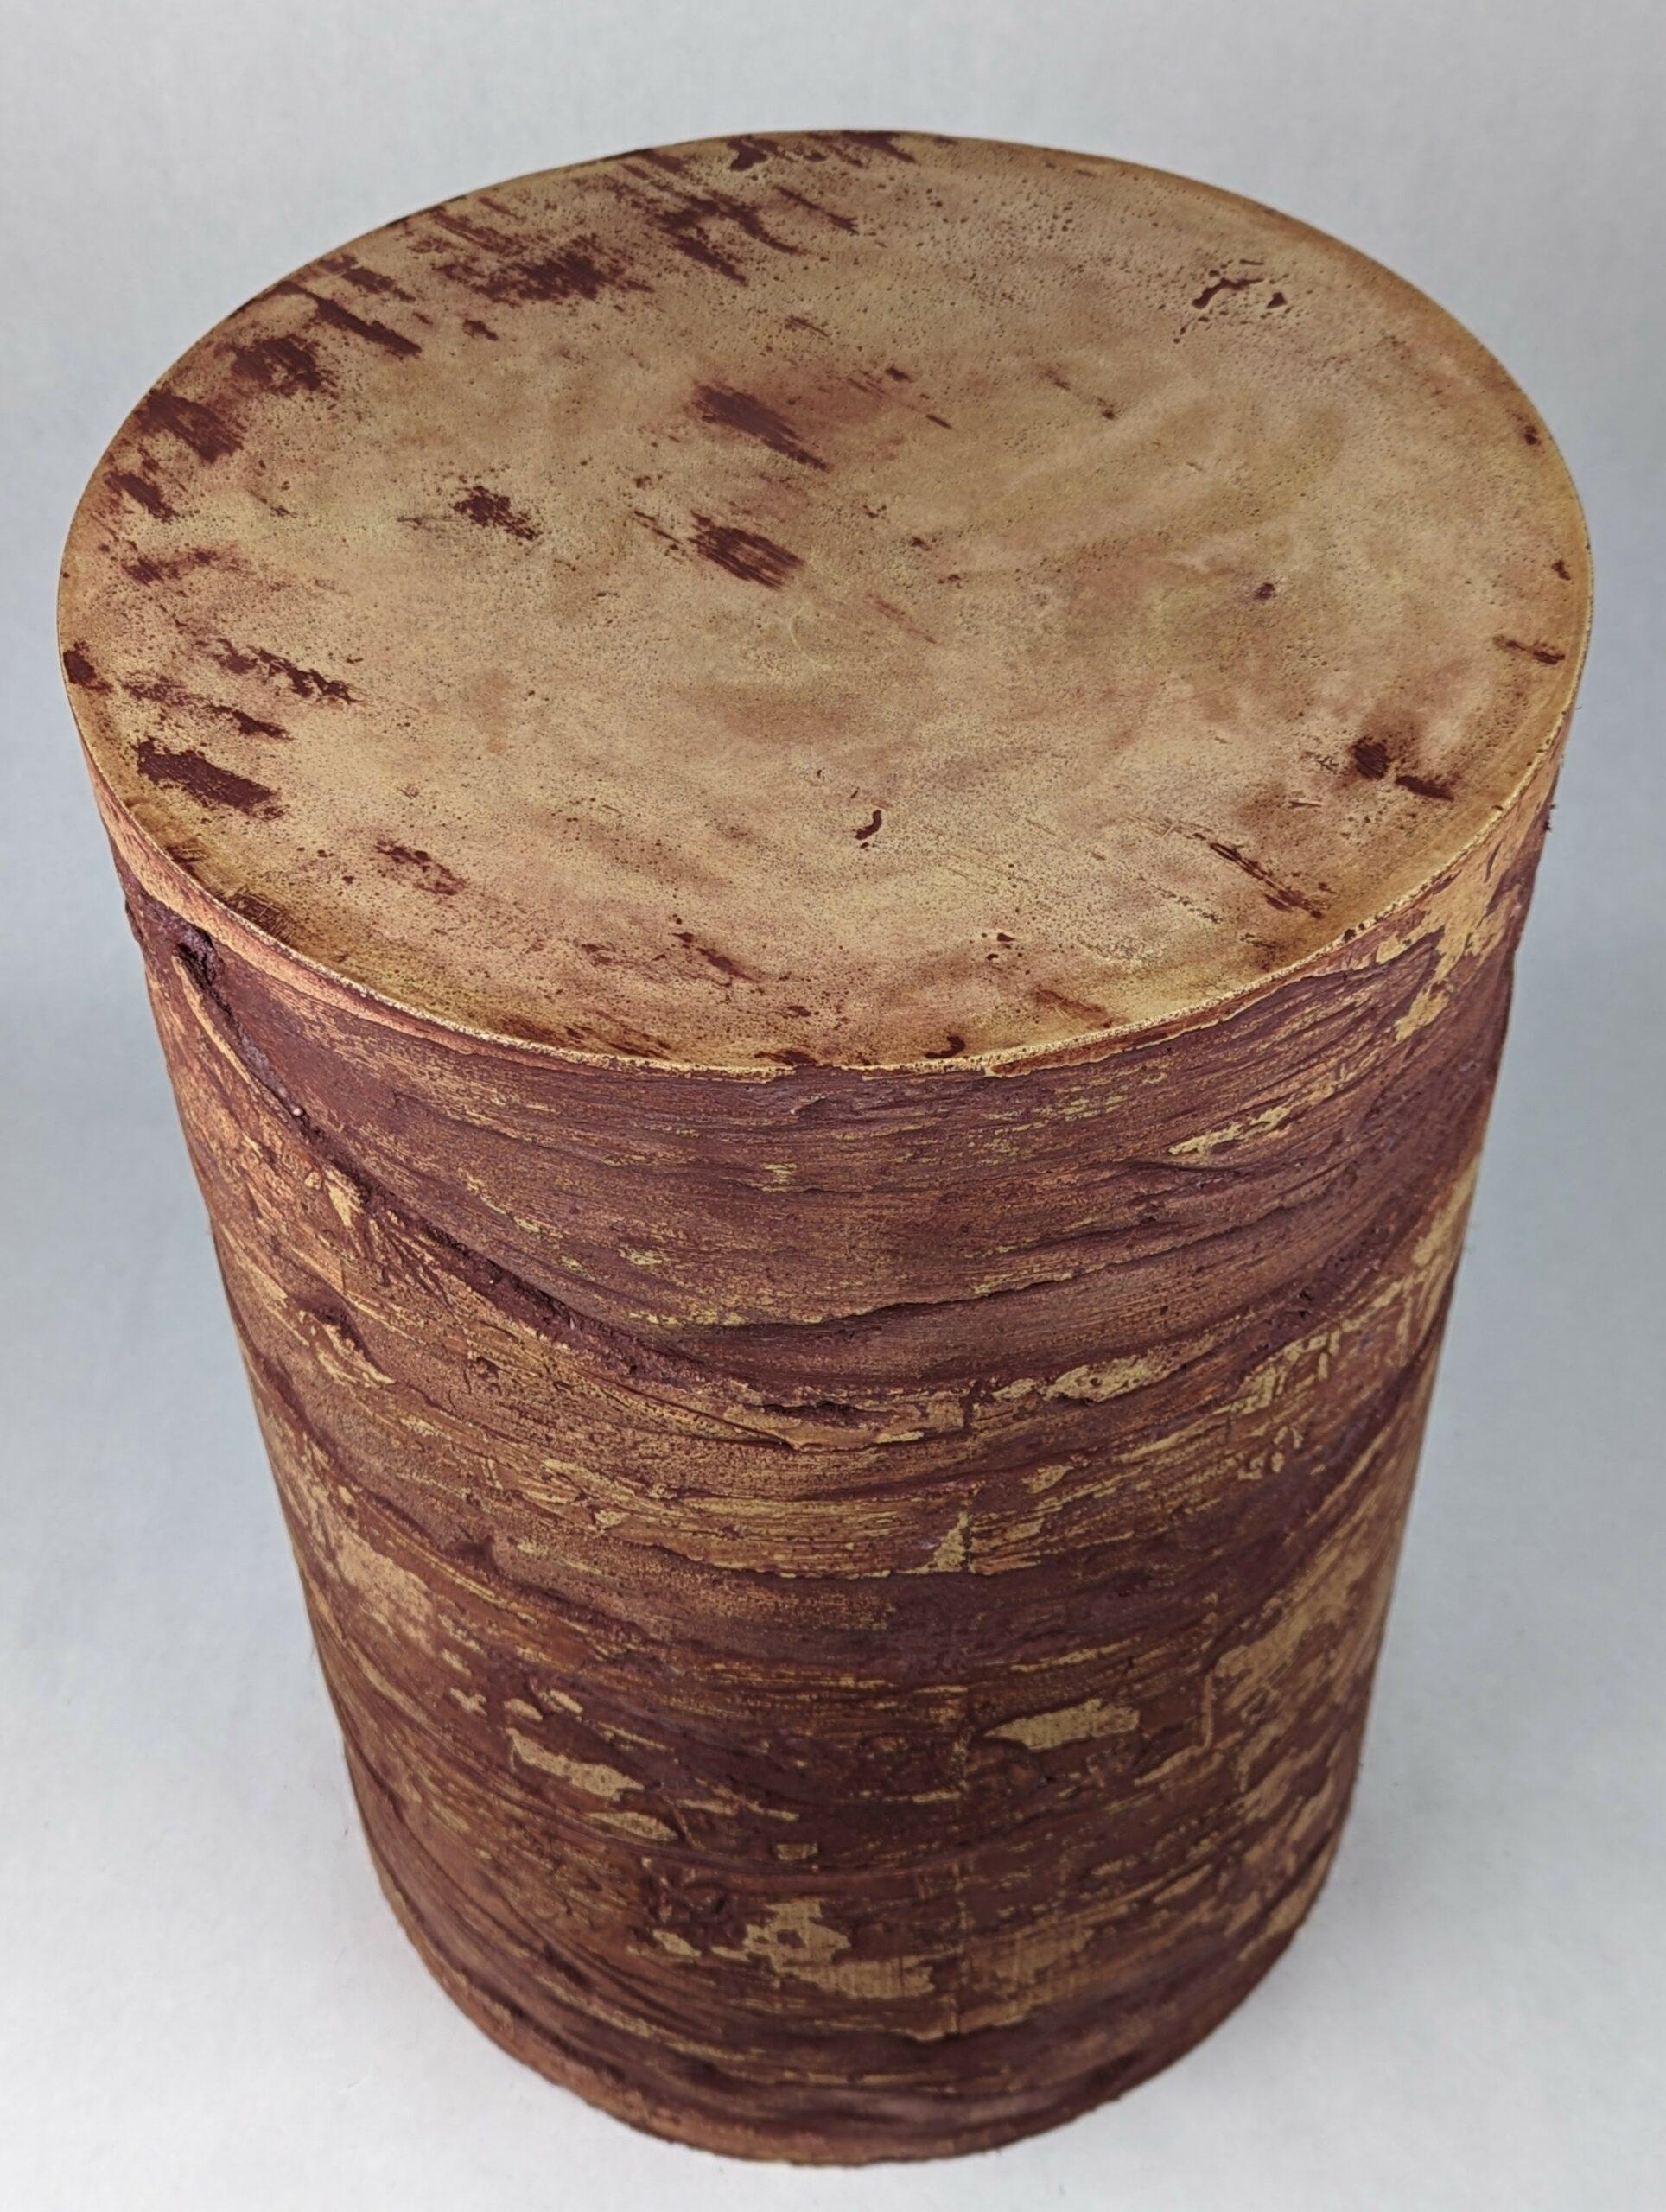 Organic Modern Dark Purple Palm Textured Concrete Stool, 'Caput Mortuum' For Sale